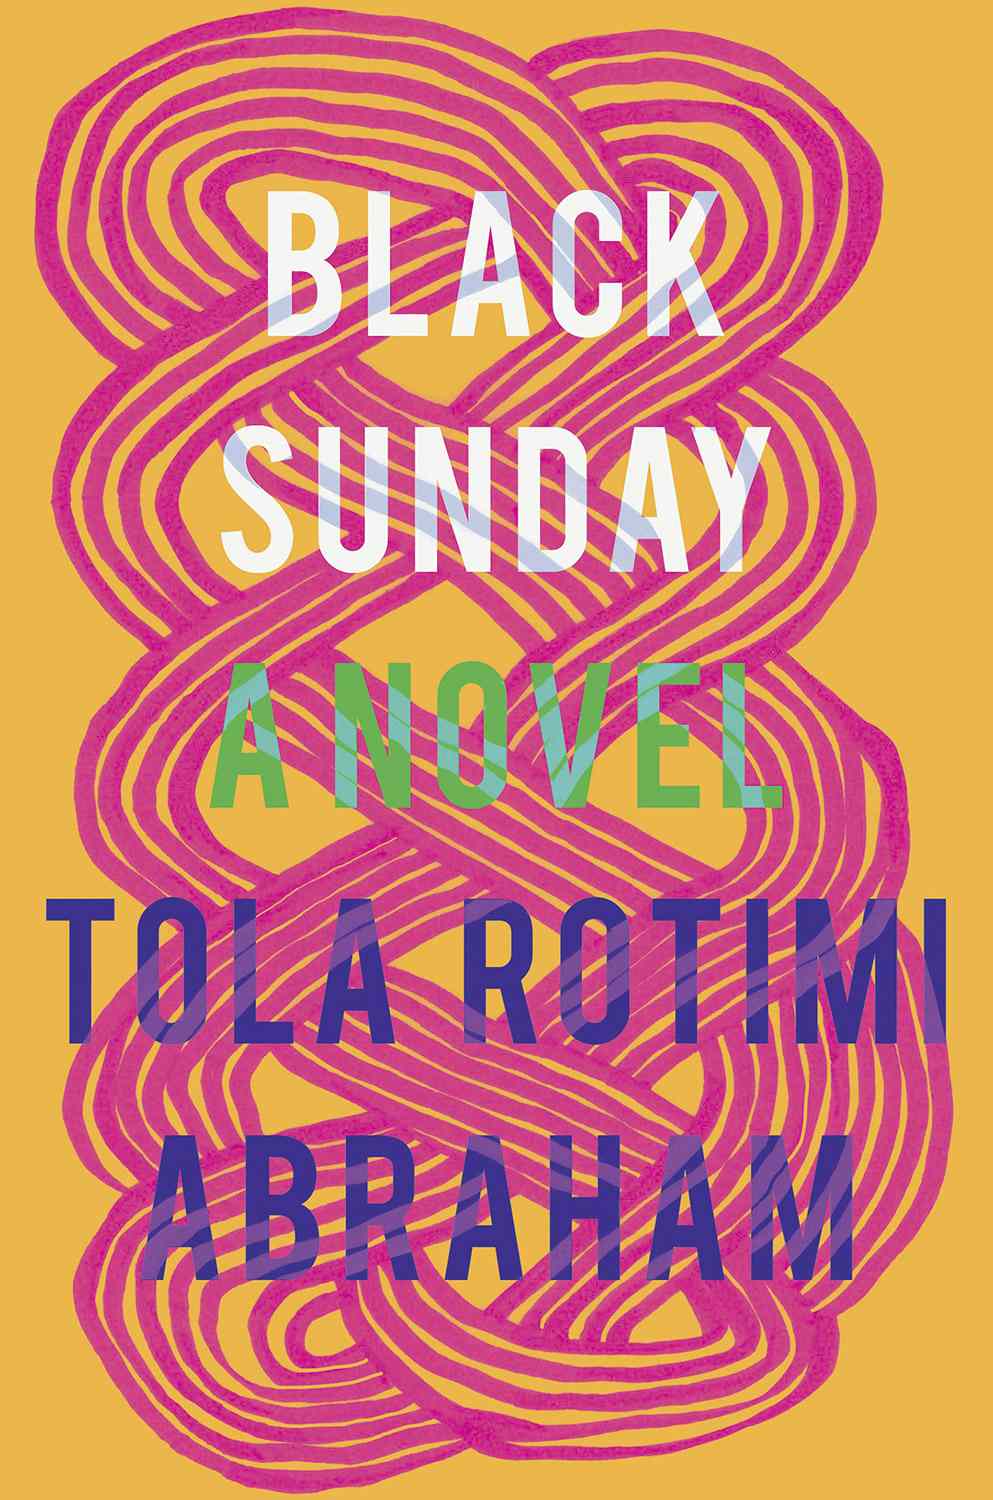 Black Sunday, by Tola Rotimi Abraham